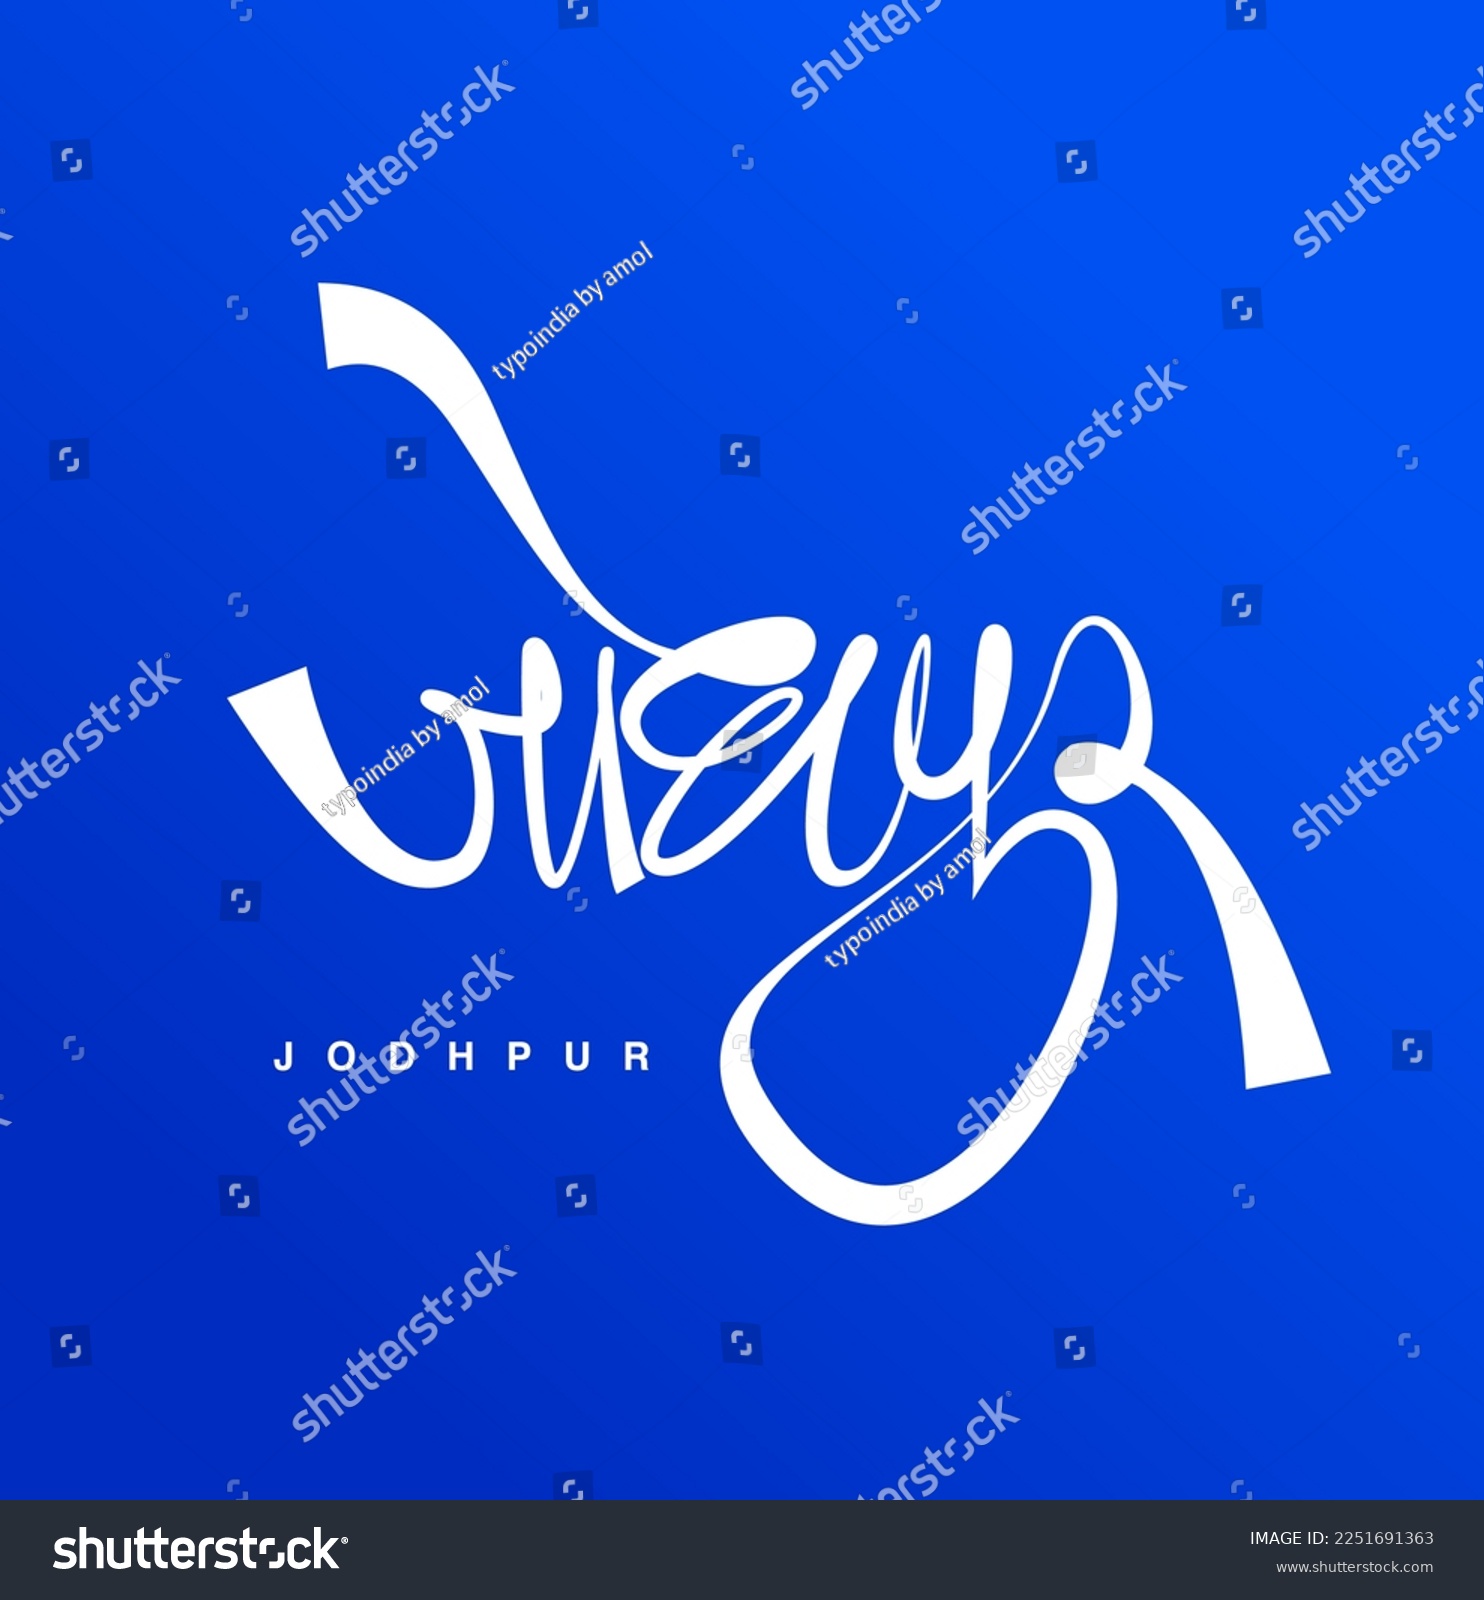 SVG of Jodhpur City name in Devanagari Calligraphy. Jodhpur blue city calligraphic expression. svg